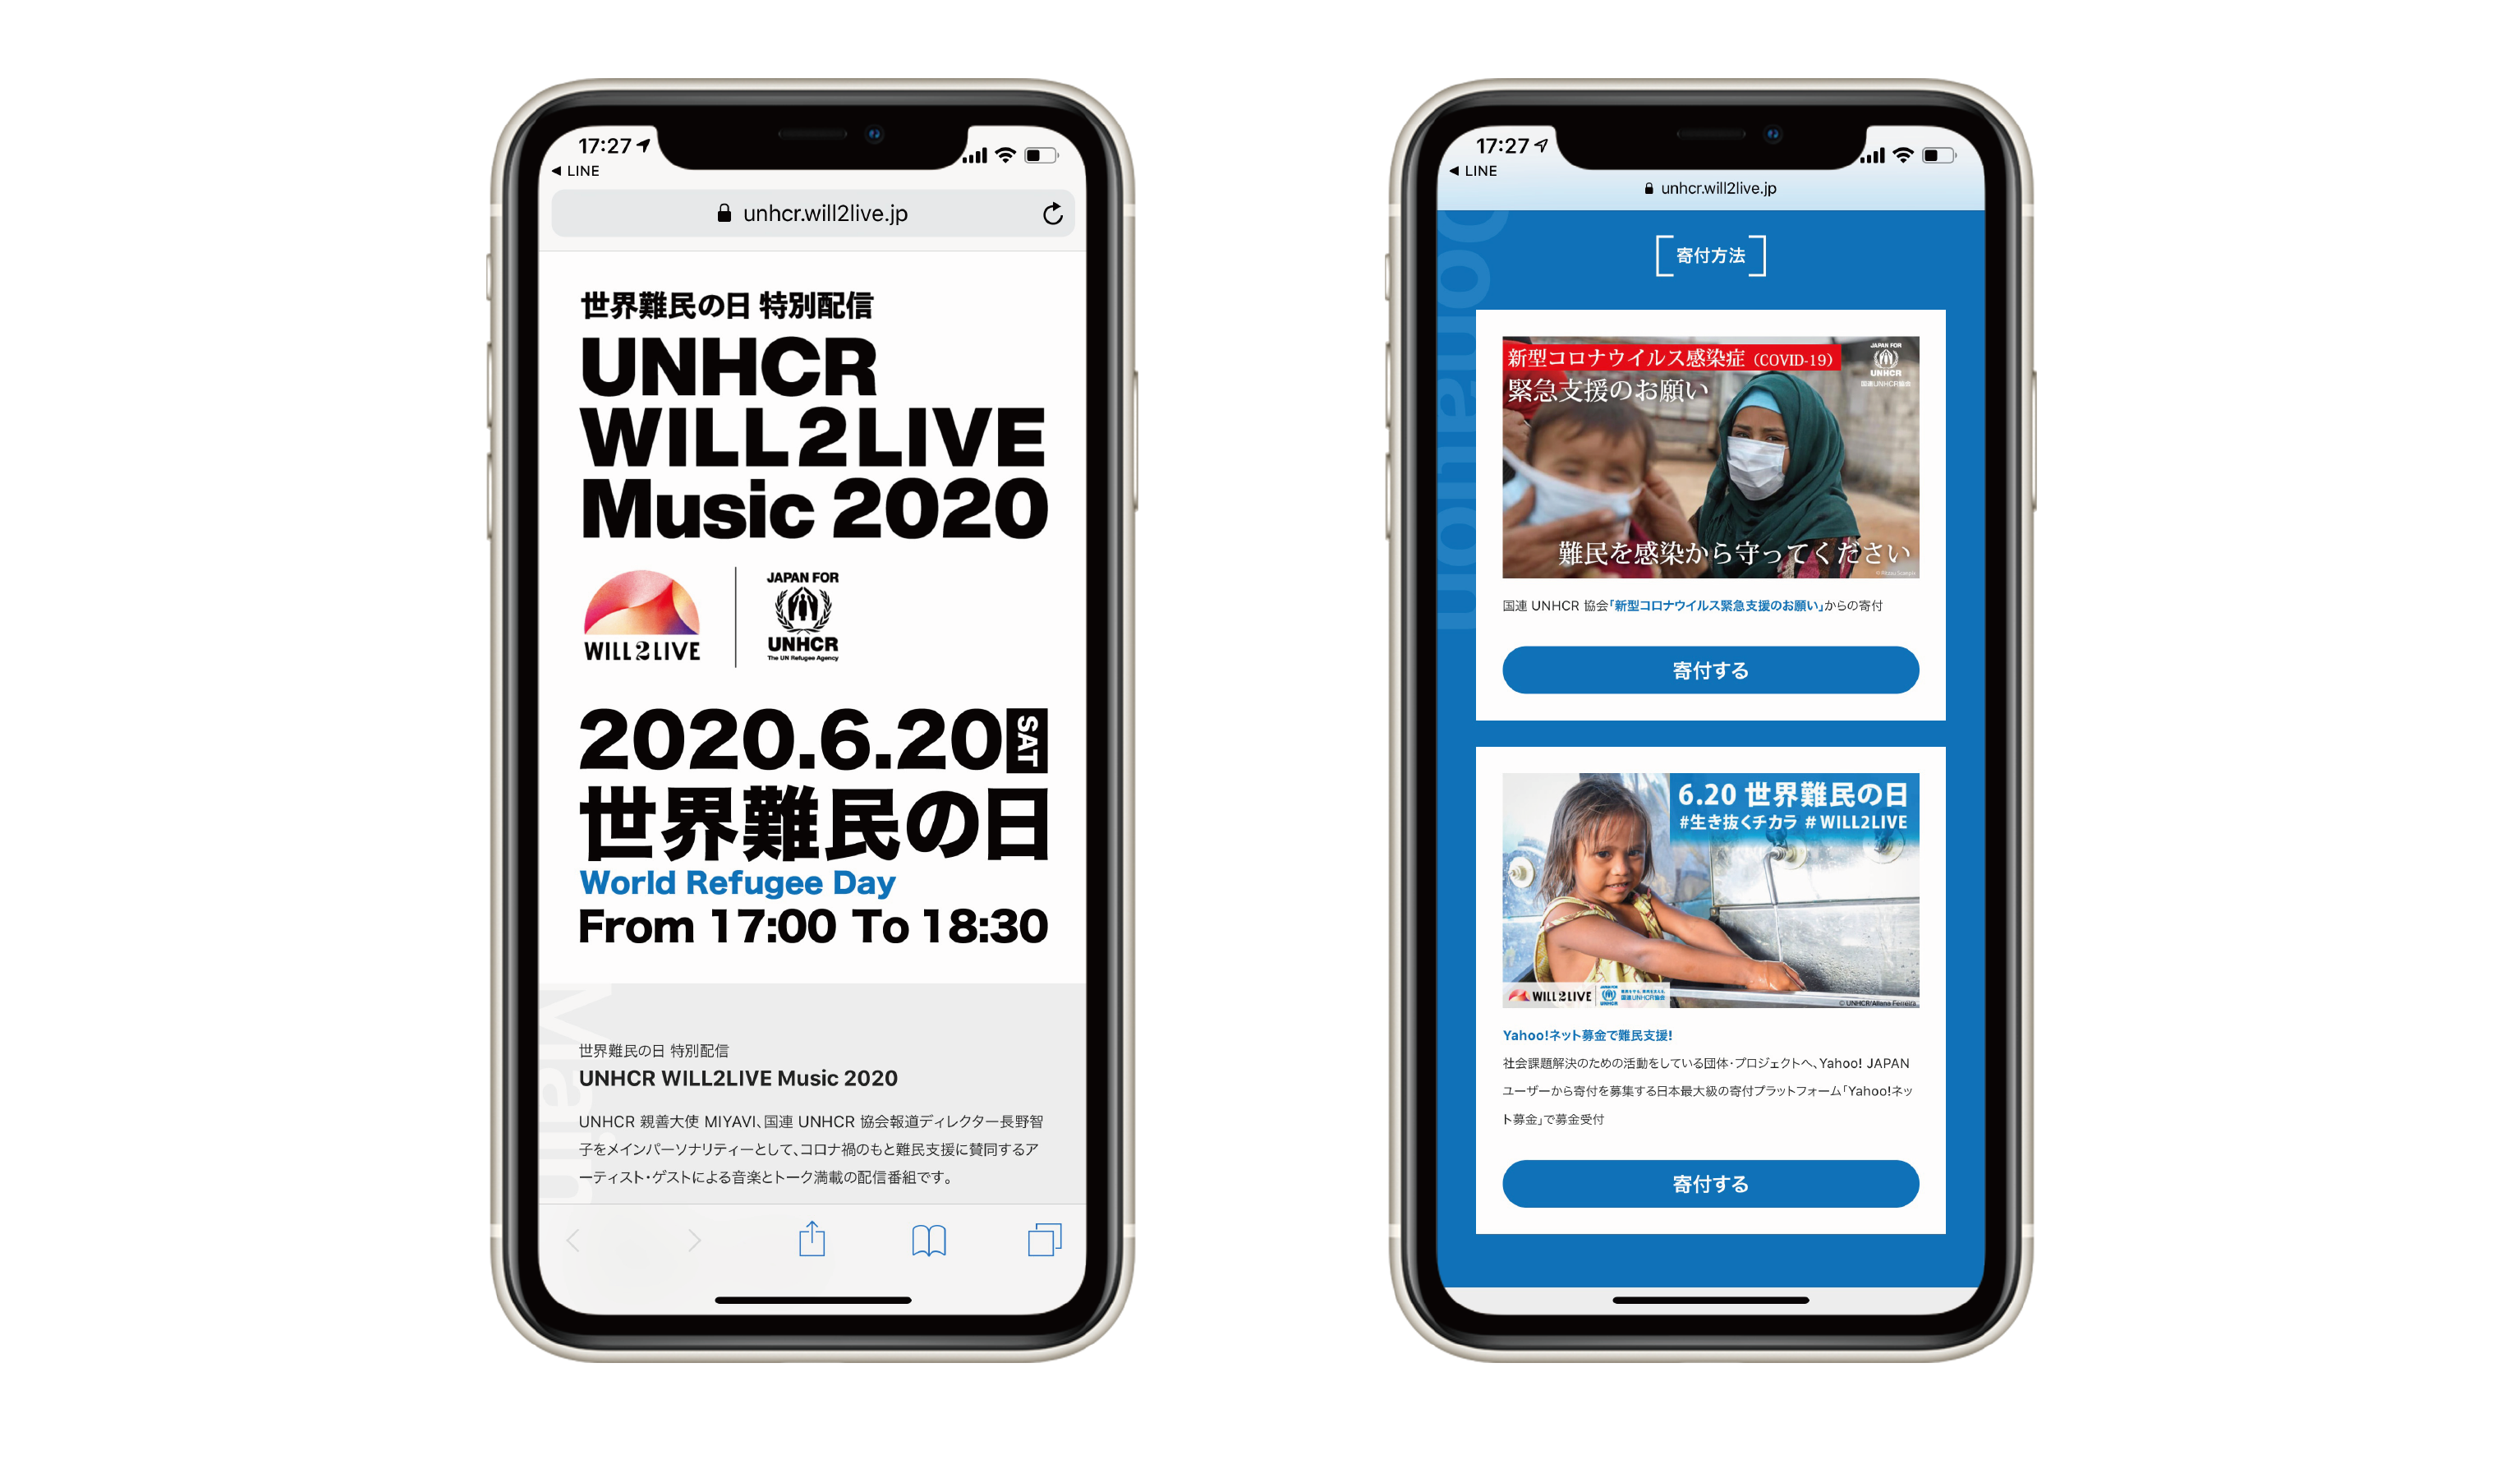 UNHCR WILL2LIVE Music 2020 特設サイト / WEB